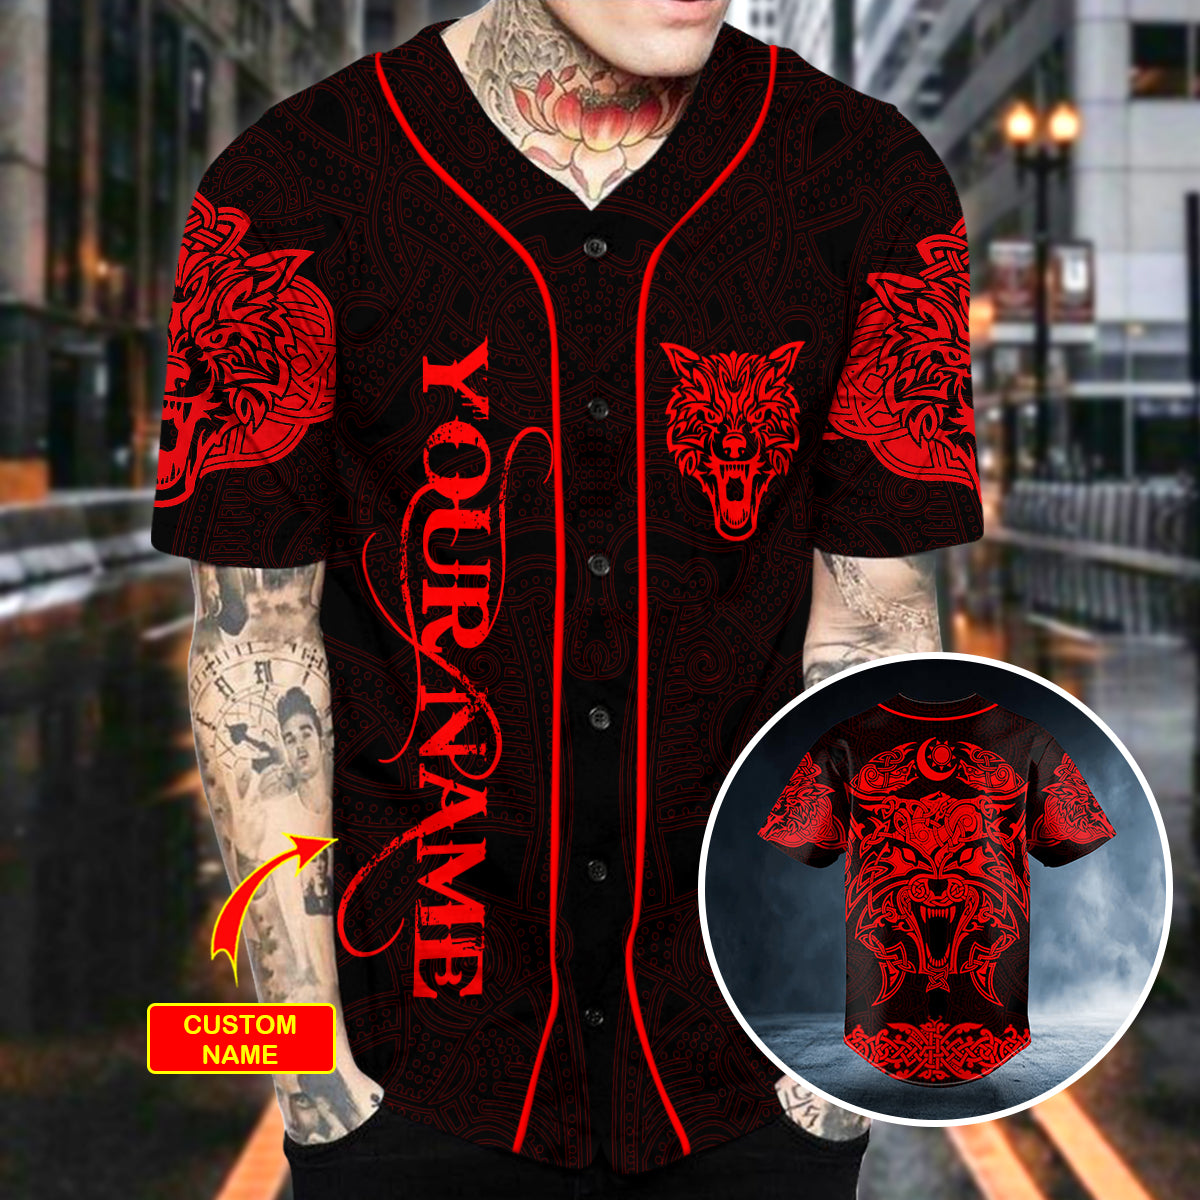 red wolf power viking tattoo custom baseball jersey bsj 1076 oudhy